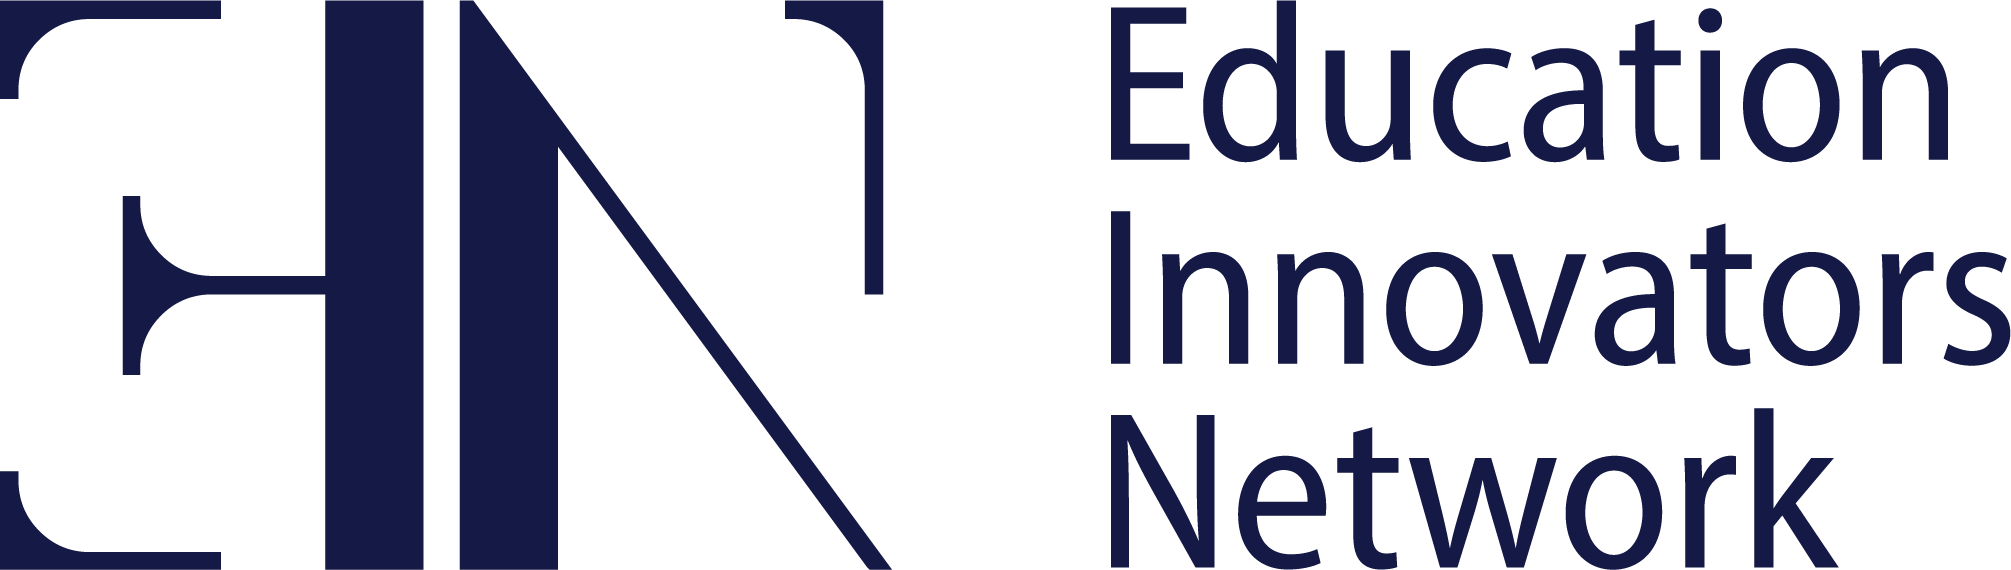 Education Innovators Network logo - eq for kidz partner